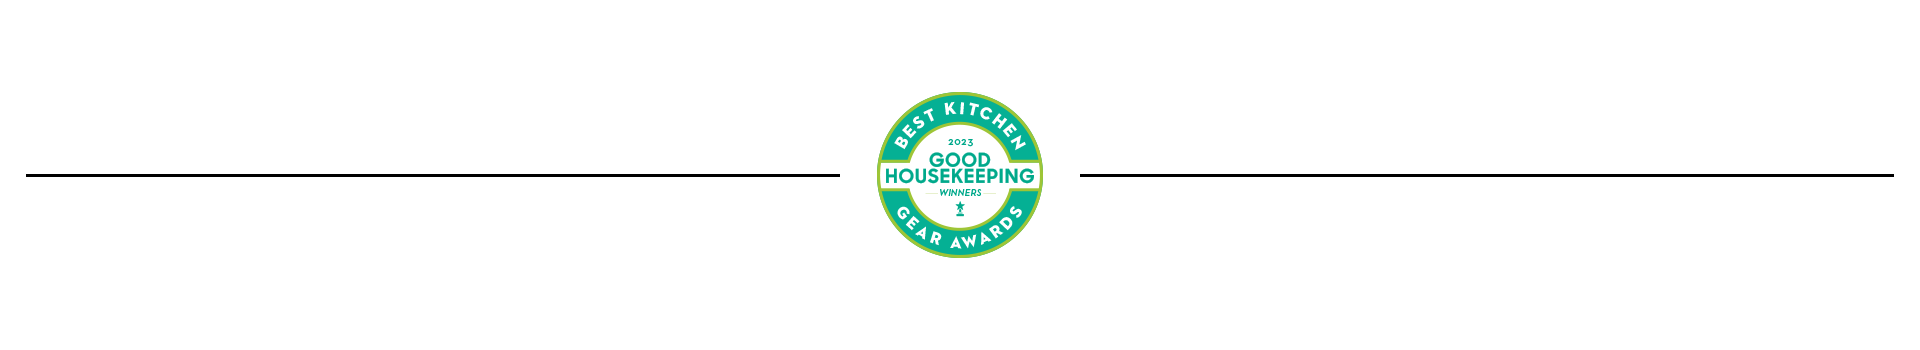 kitchen awards logo